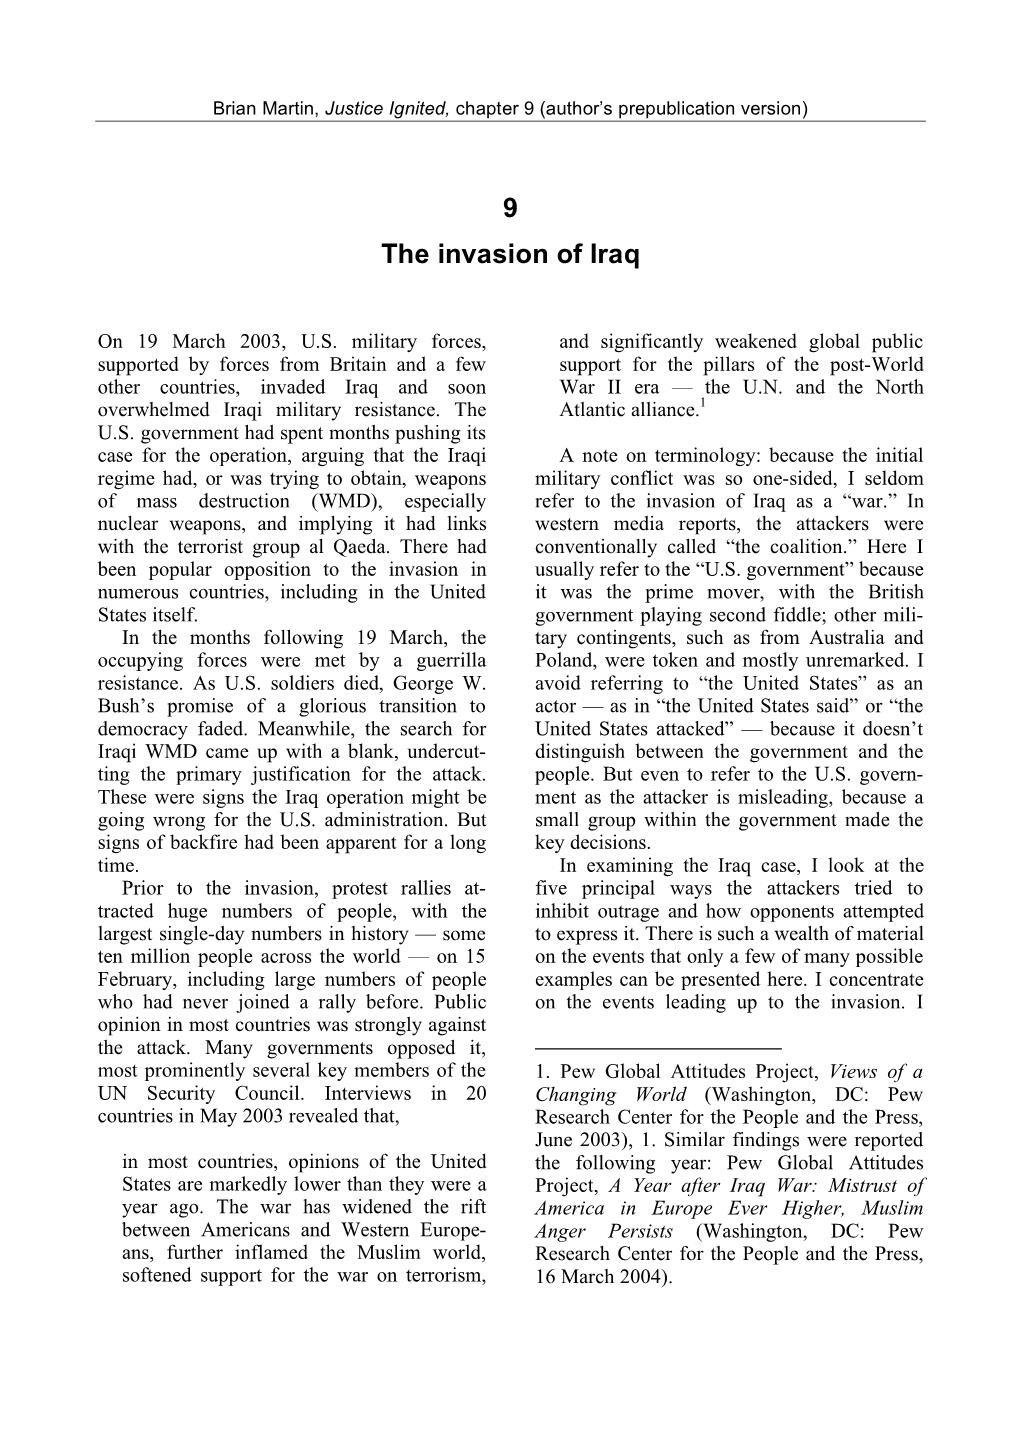 The Invasion of Iraq